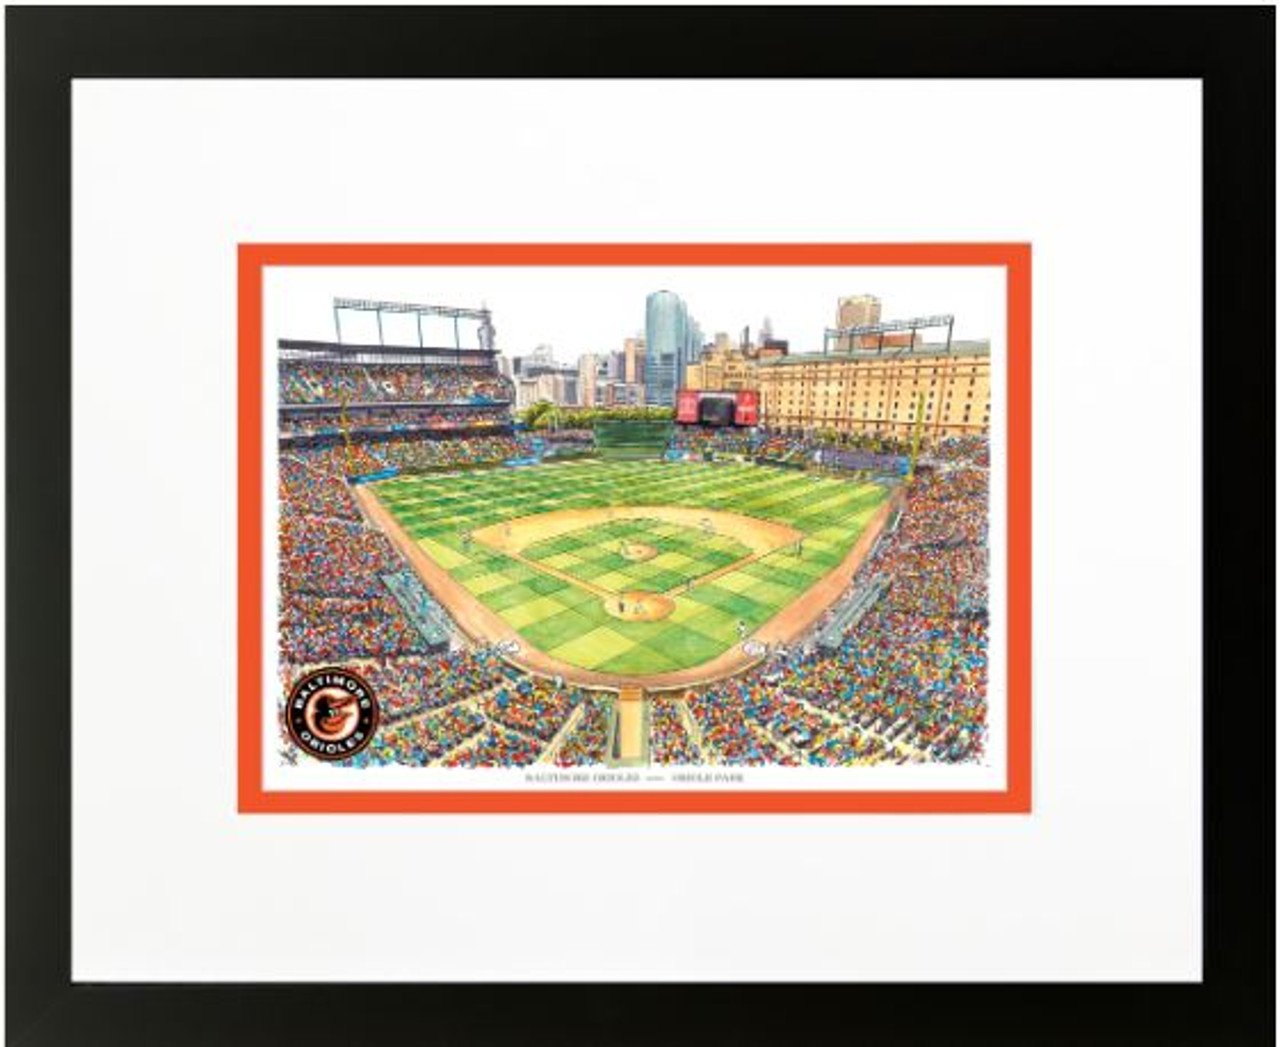 YouTheFan MLB Baltimore Orioles 3D Logo Series Wall Art - 12x12